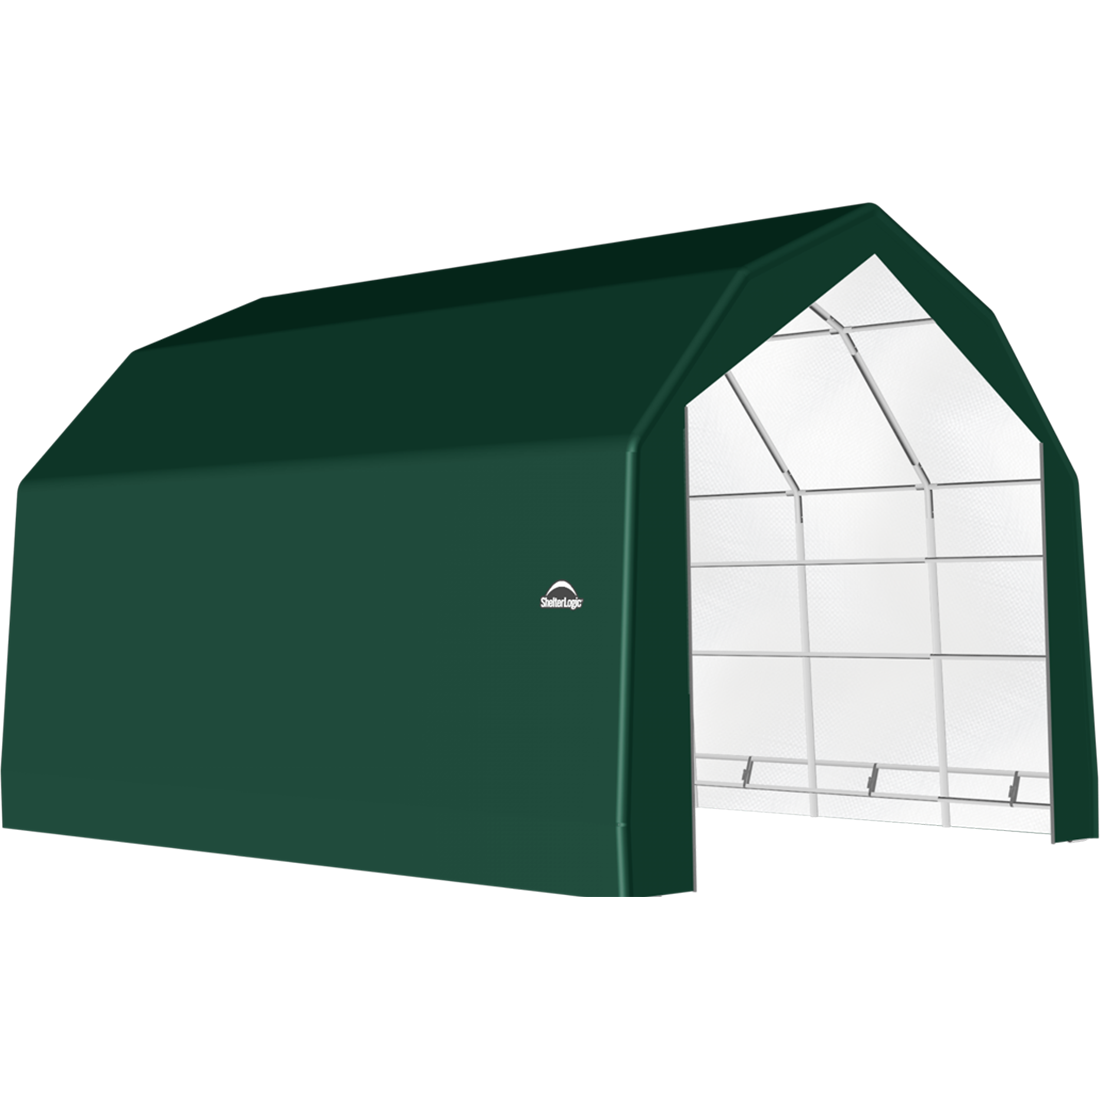 ShelterTech SP Series Barn Shelter, 20 ft. x 28 ft. x 15 ft. Heavy Duty PVC 14.5 oz. Green